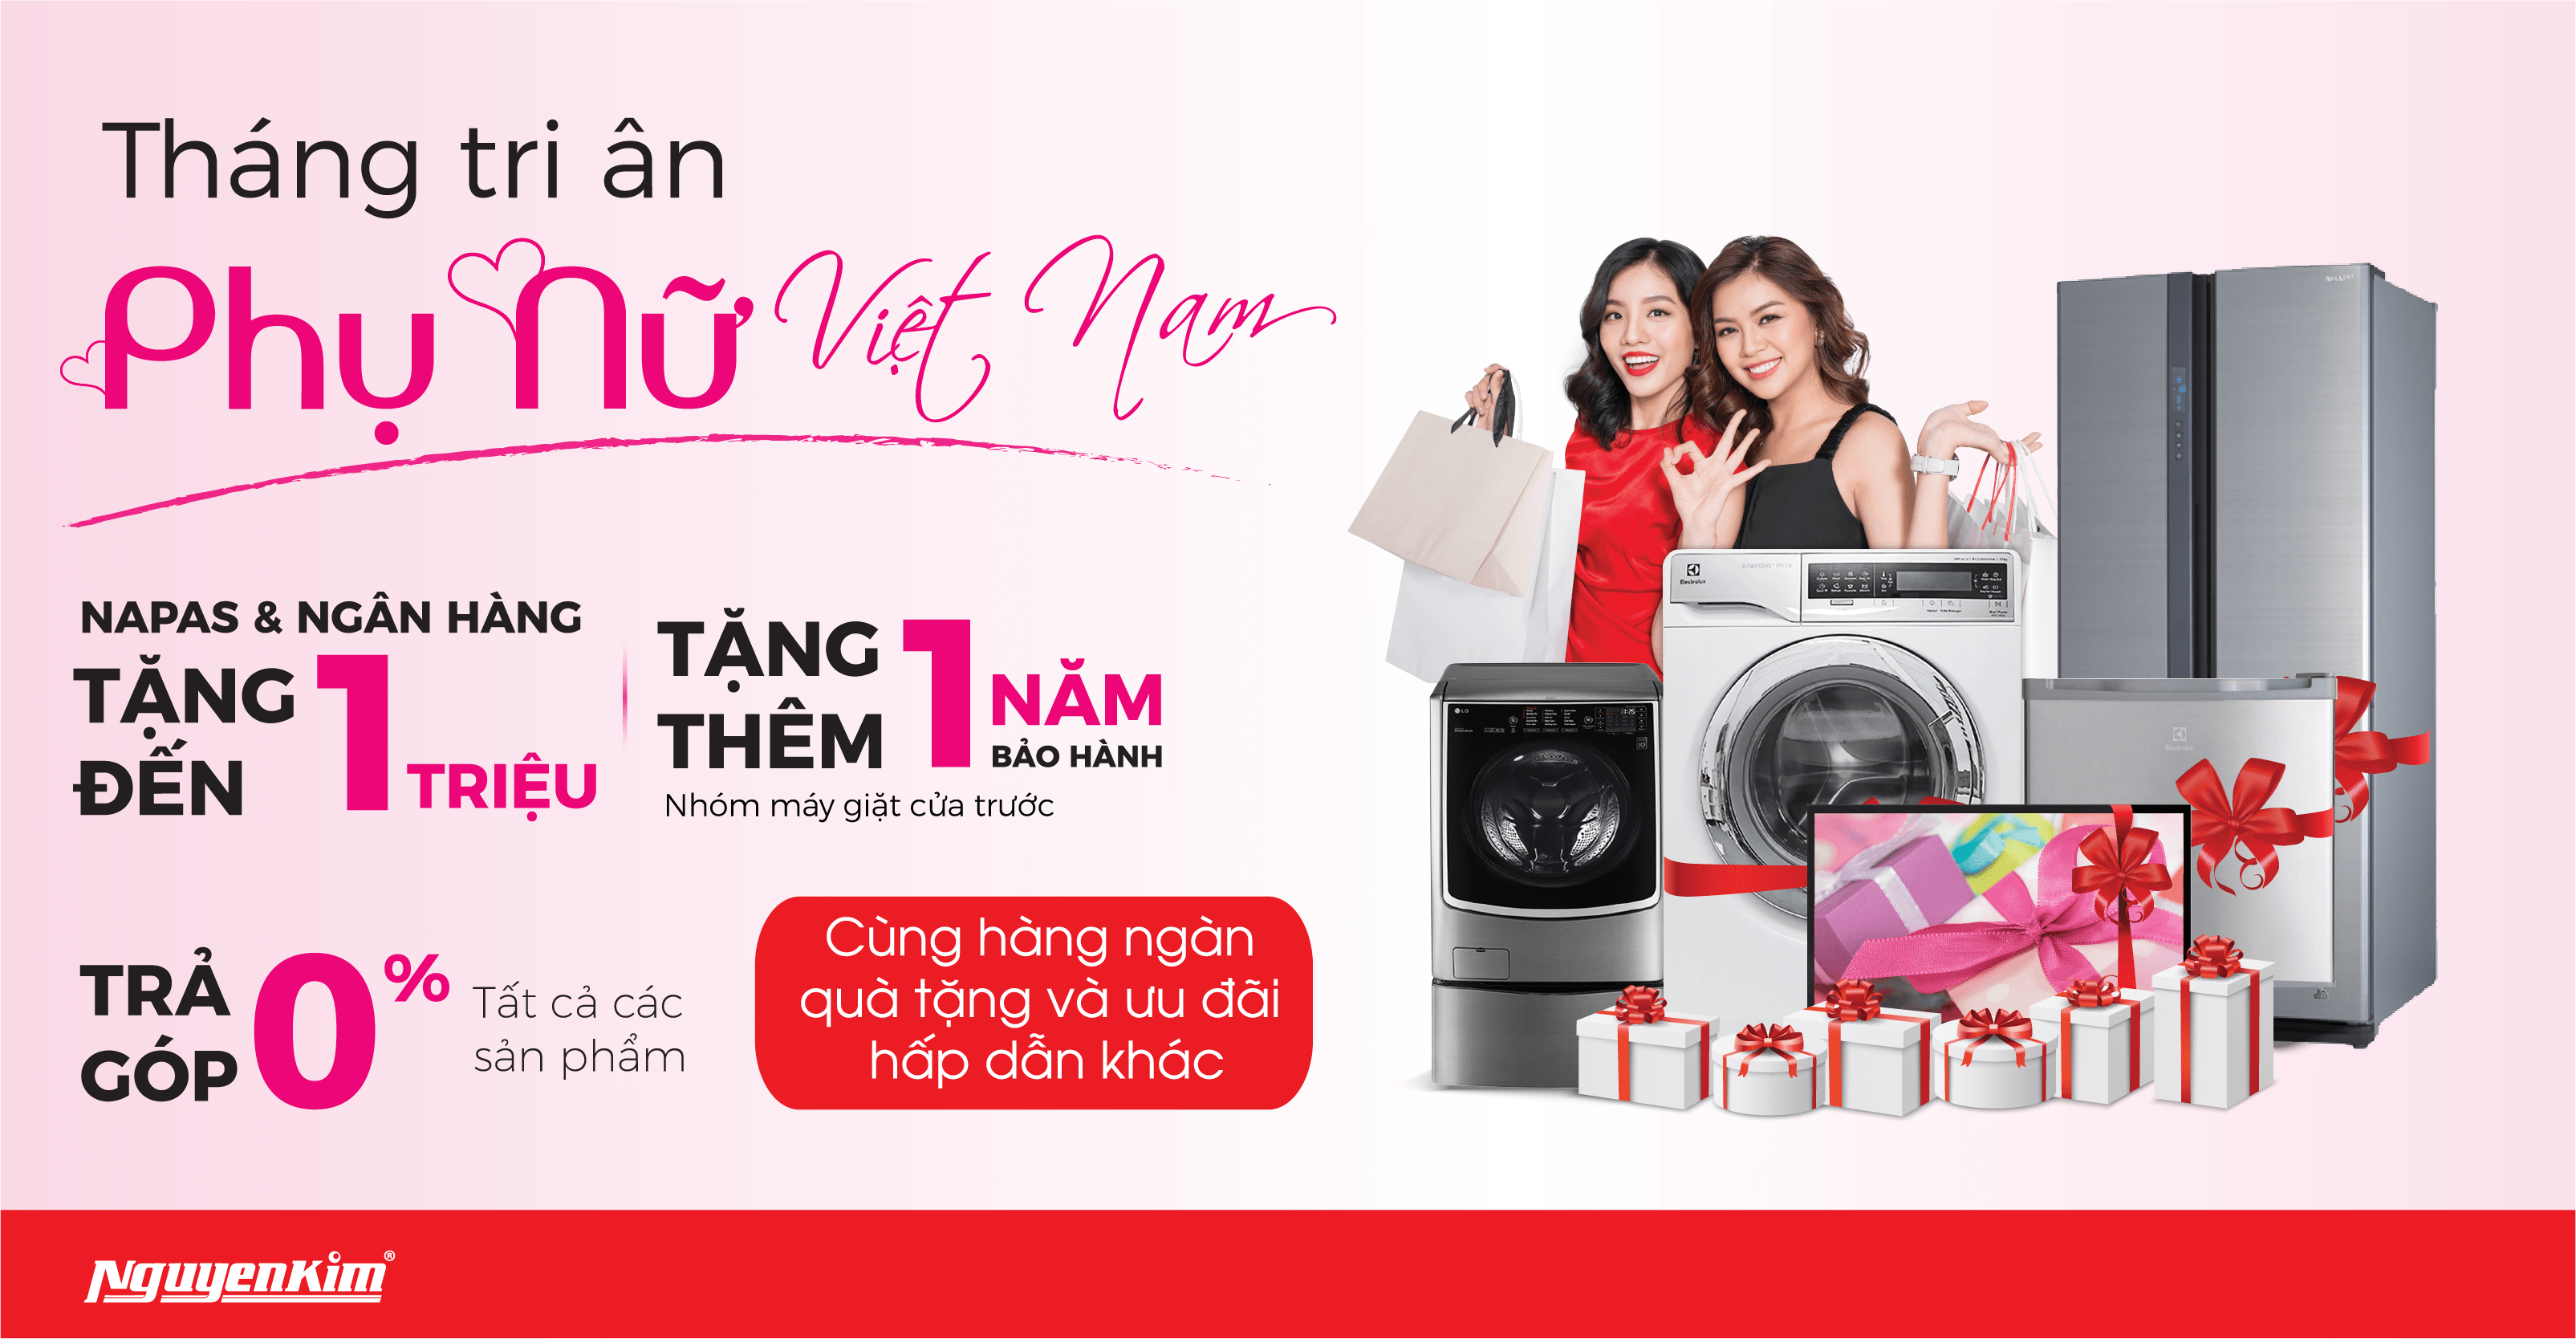 Nguyen Kim's Vietnamese Women Month: best deal ever for customers